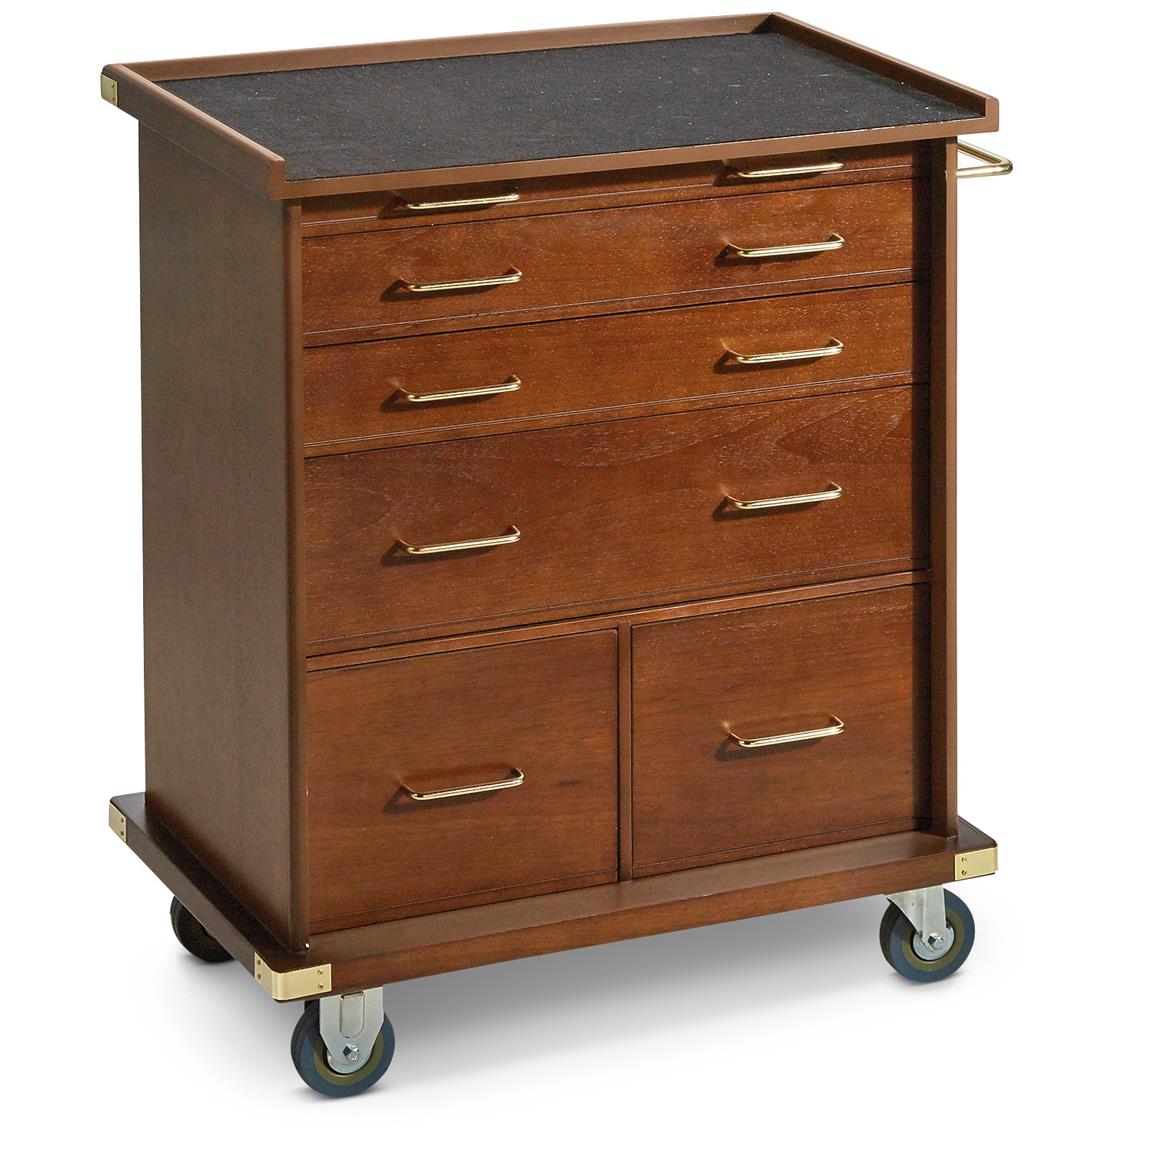 CASTLECREEK Rolling Storage Cabinet - 667207, Collectibles & Displays